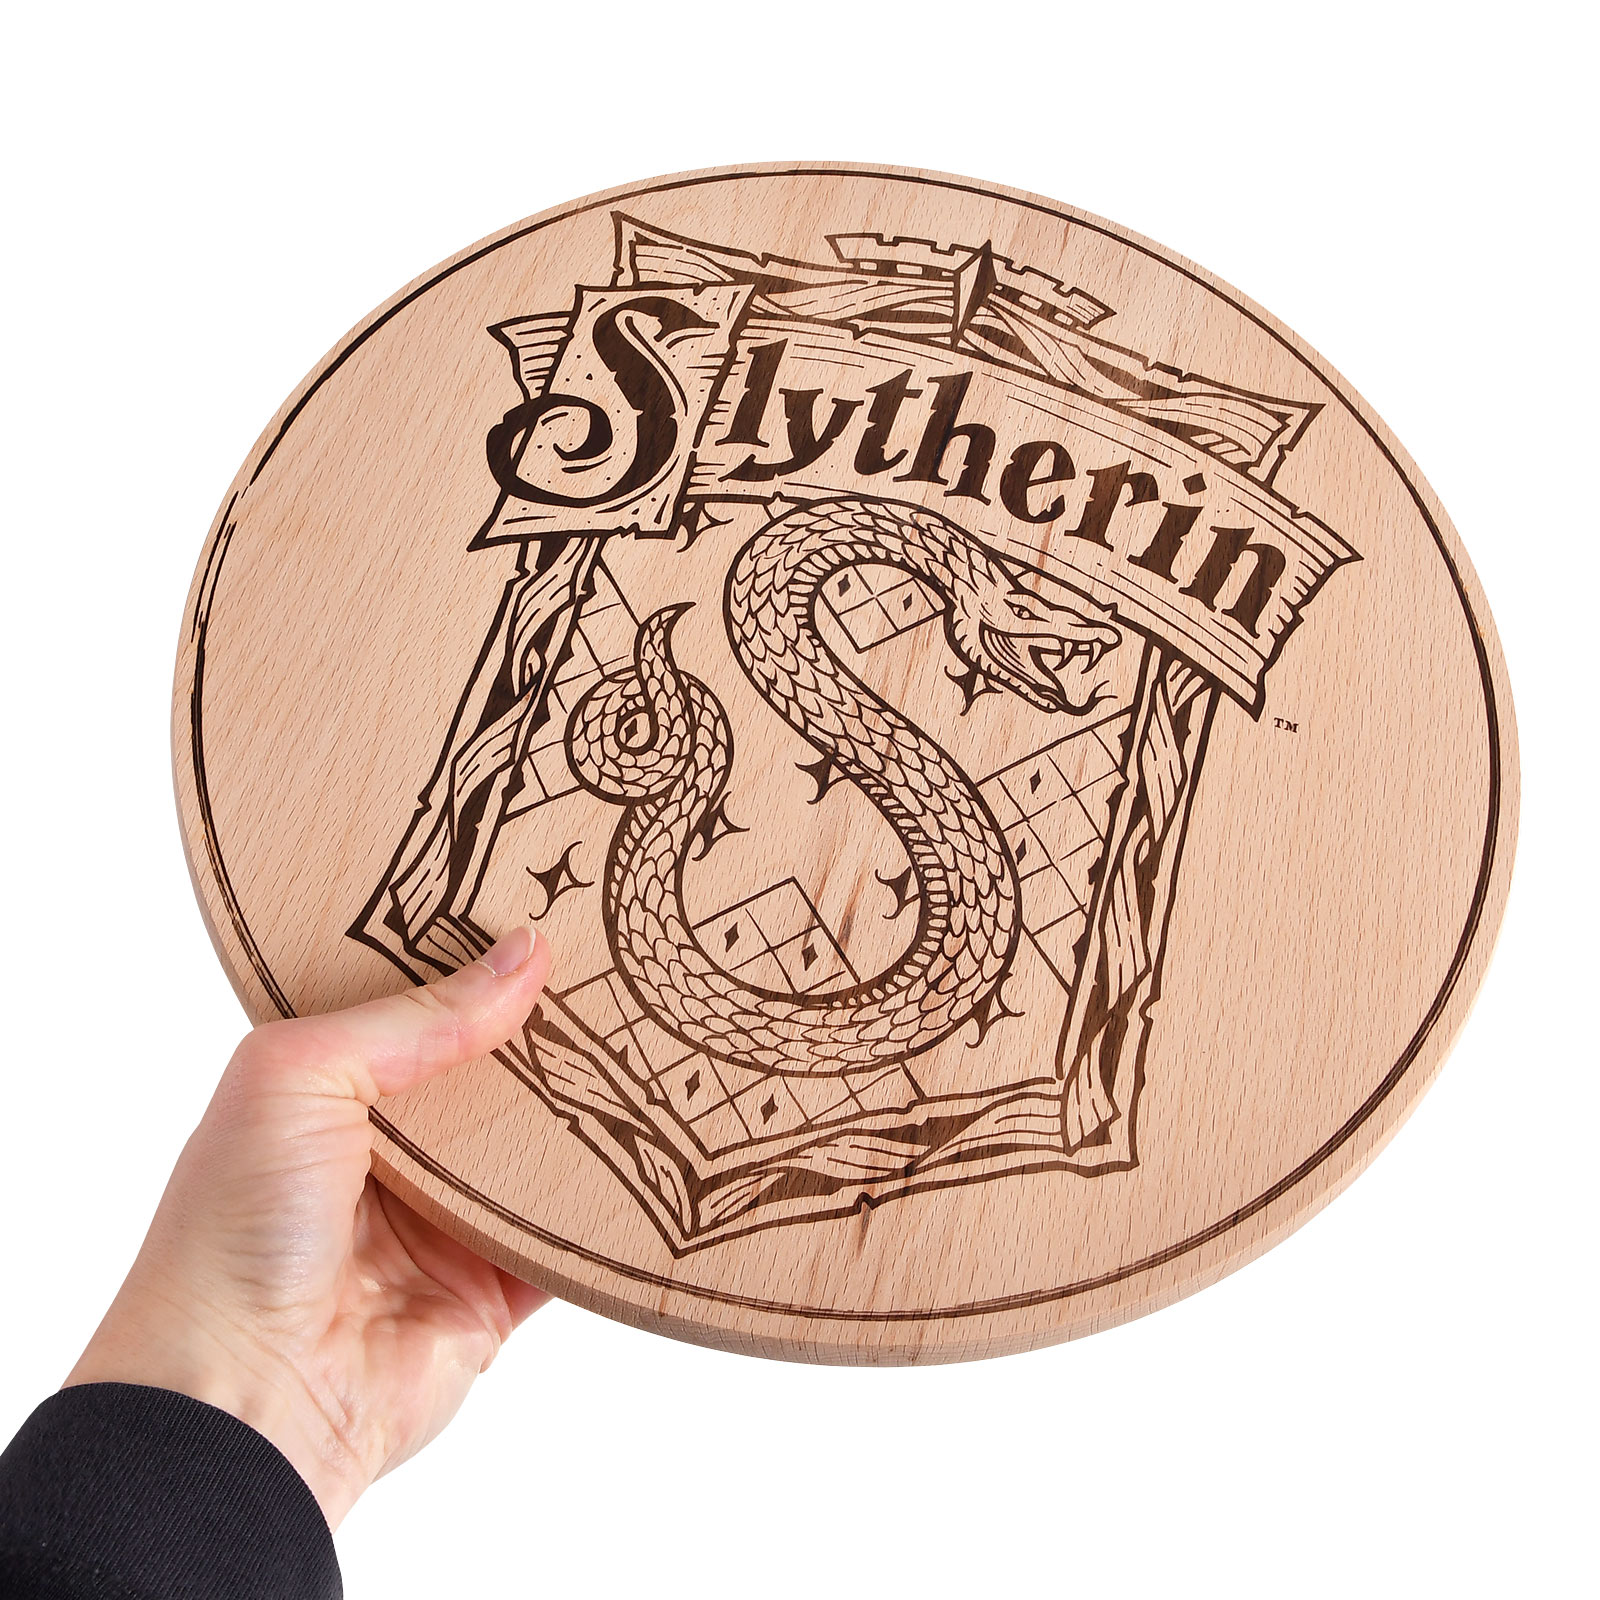 Harry Potter - Slytherin Wappen Schneidebrett Buche